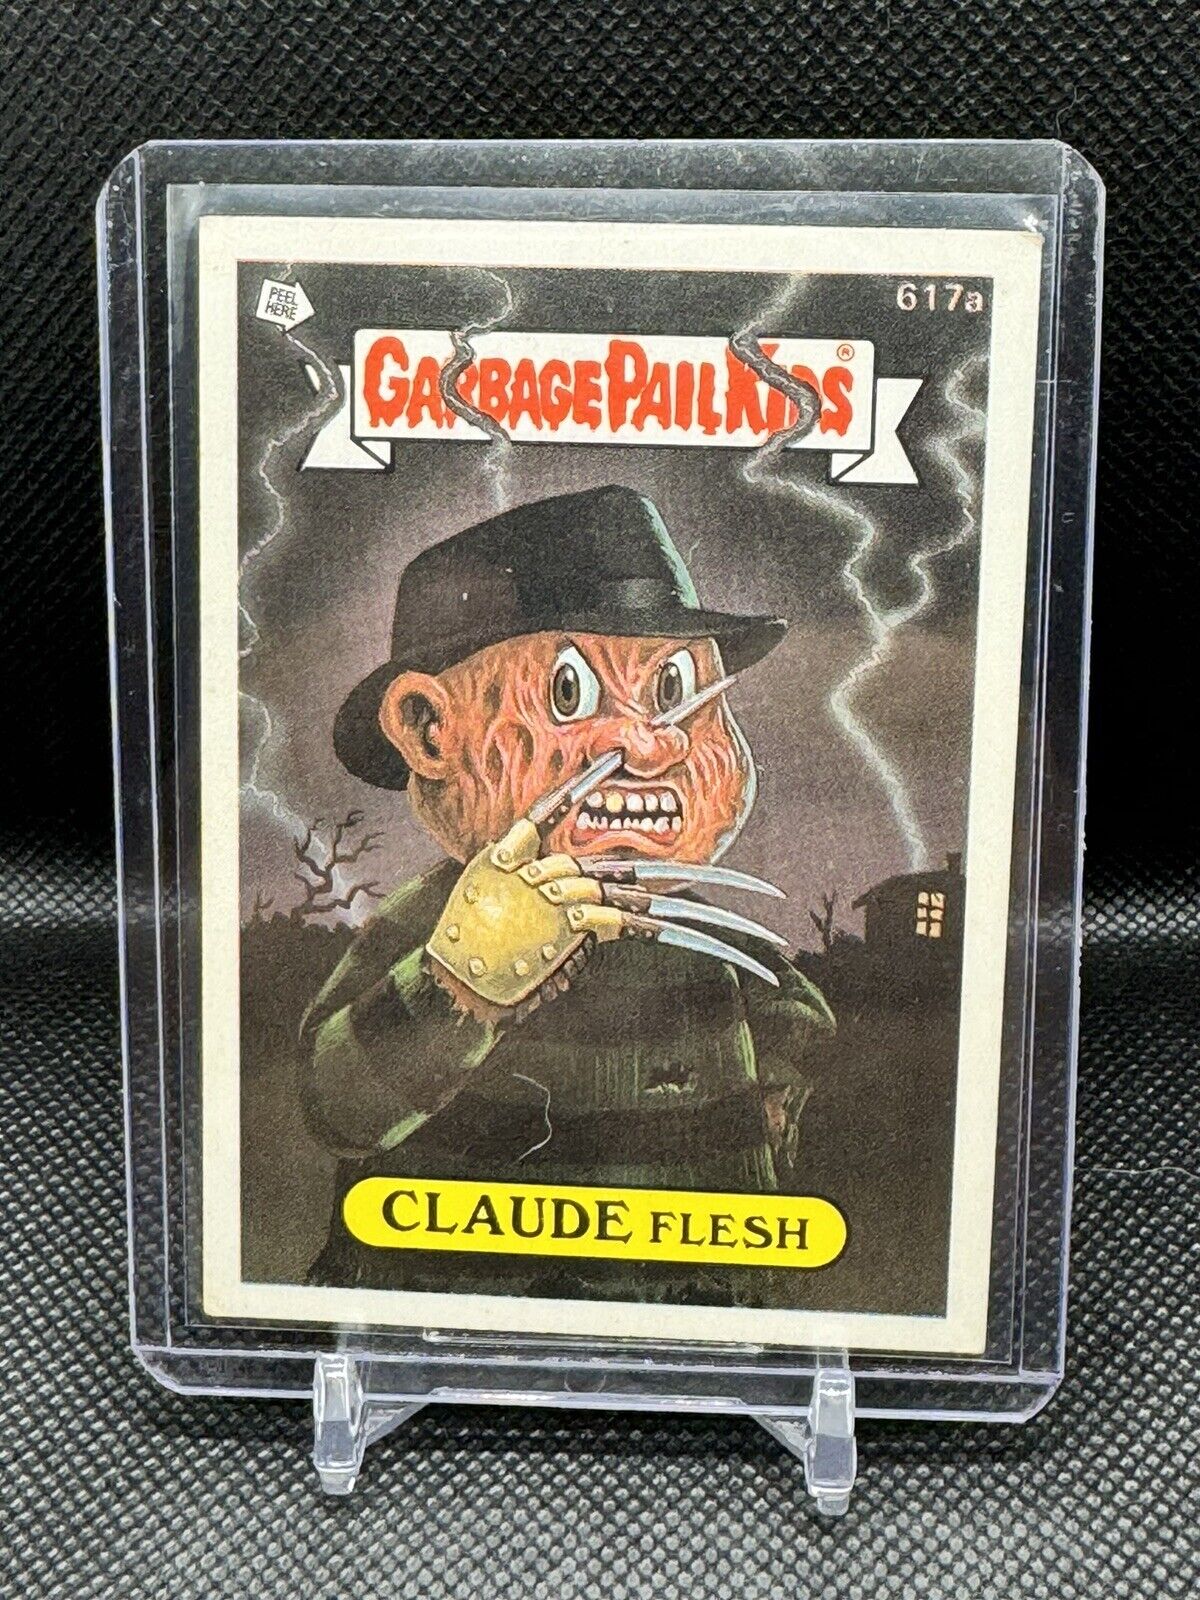 Claude Flesh Garbage Pail Kids GPK- 617a - 1988